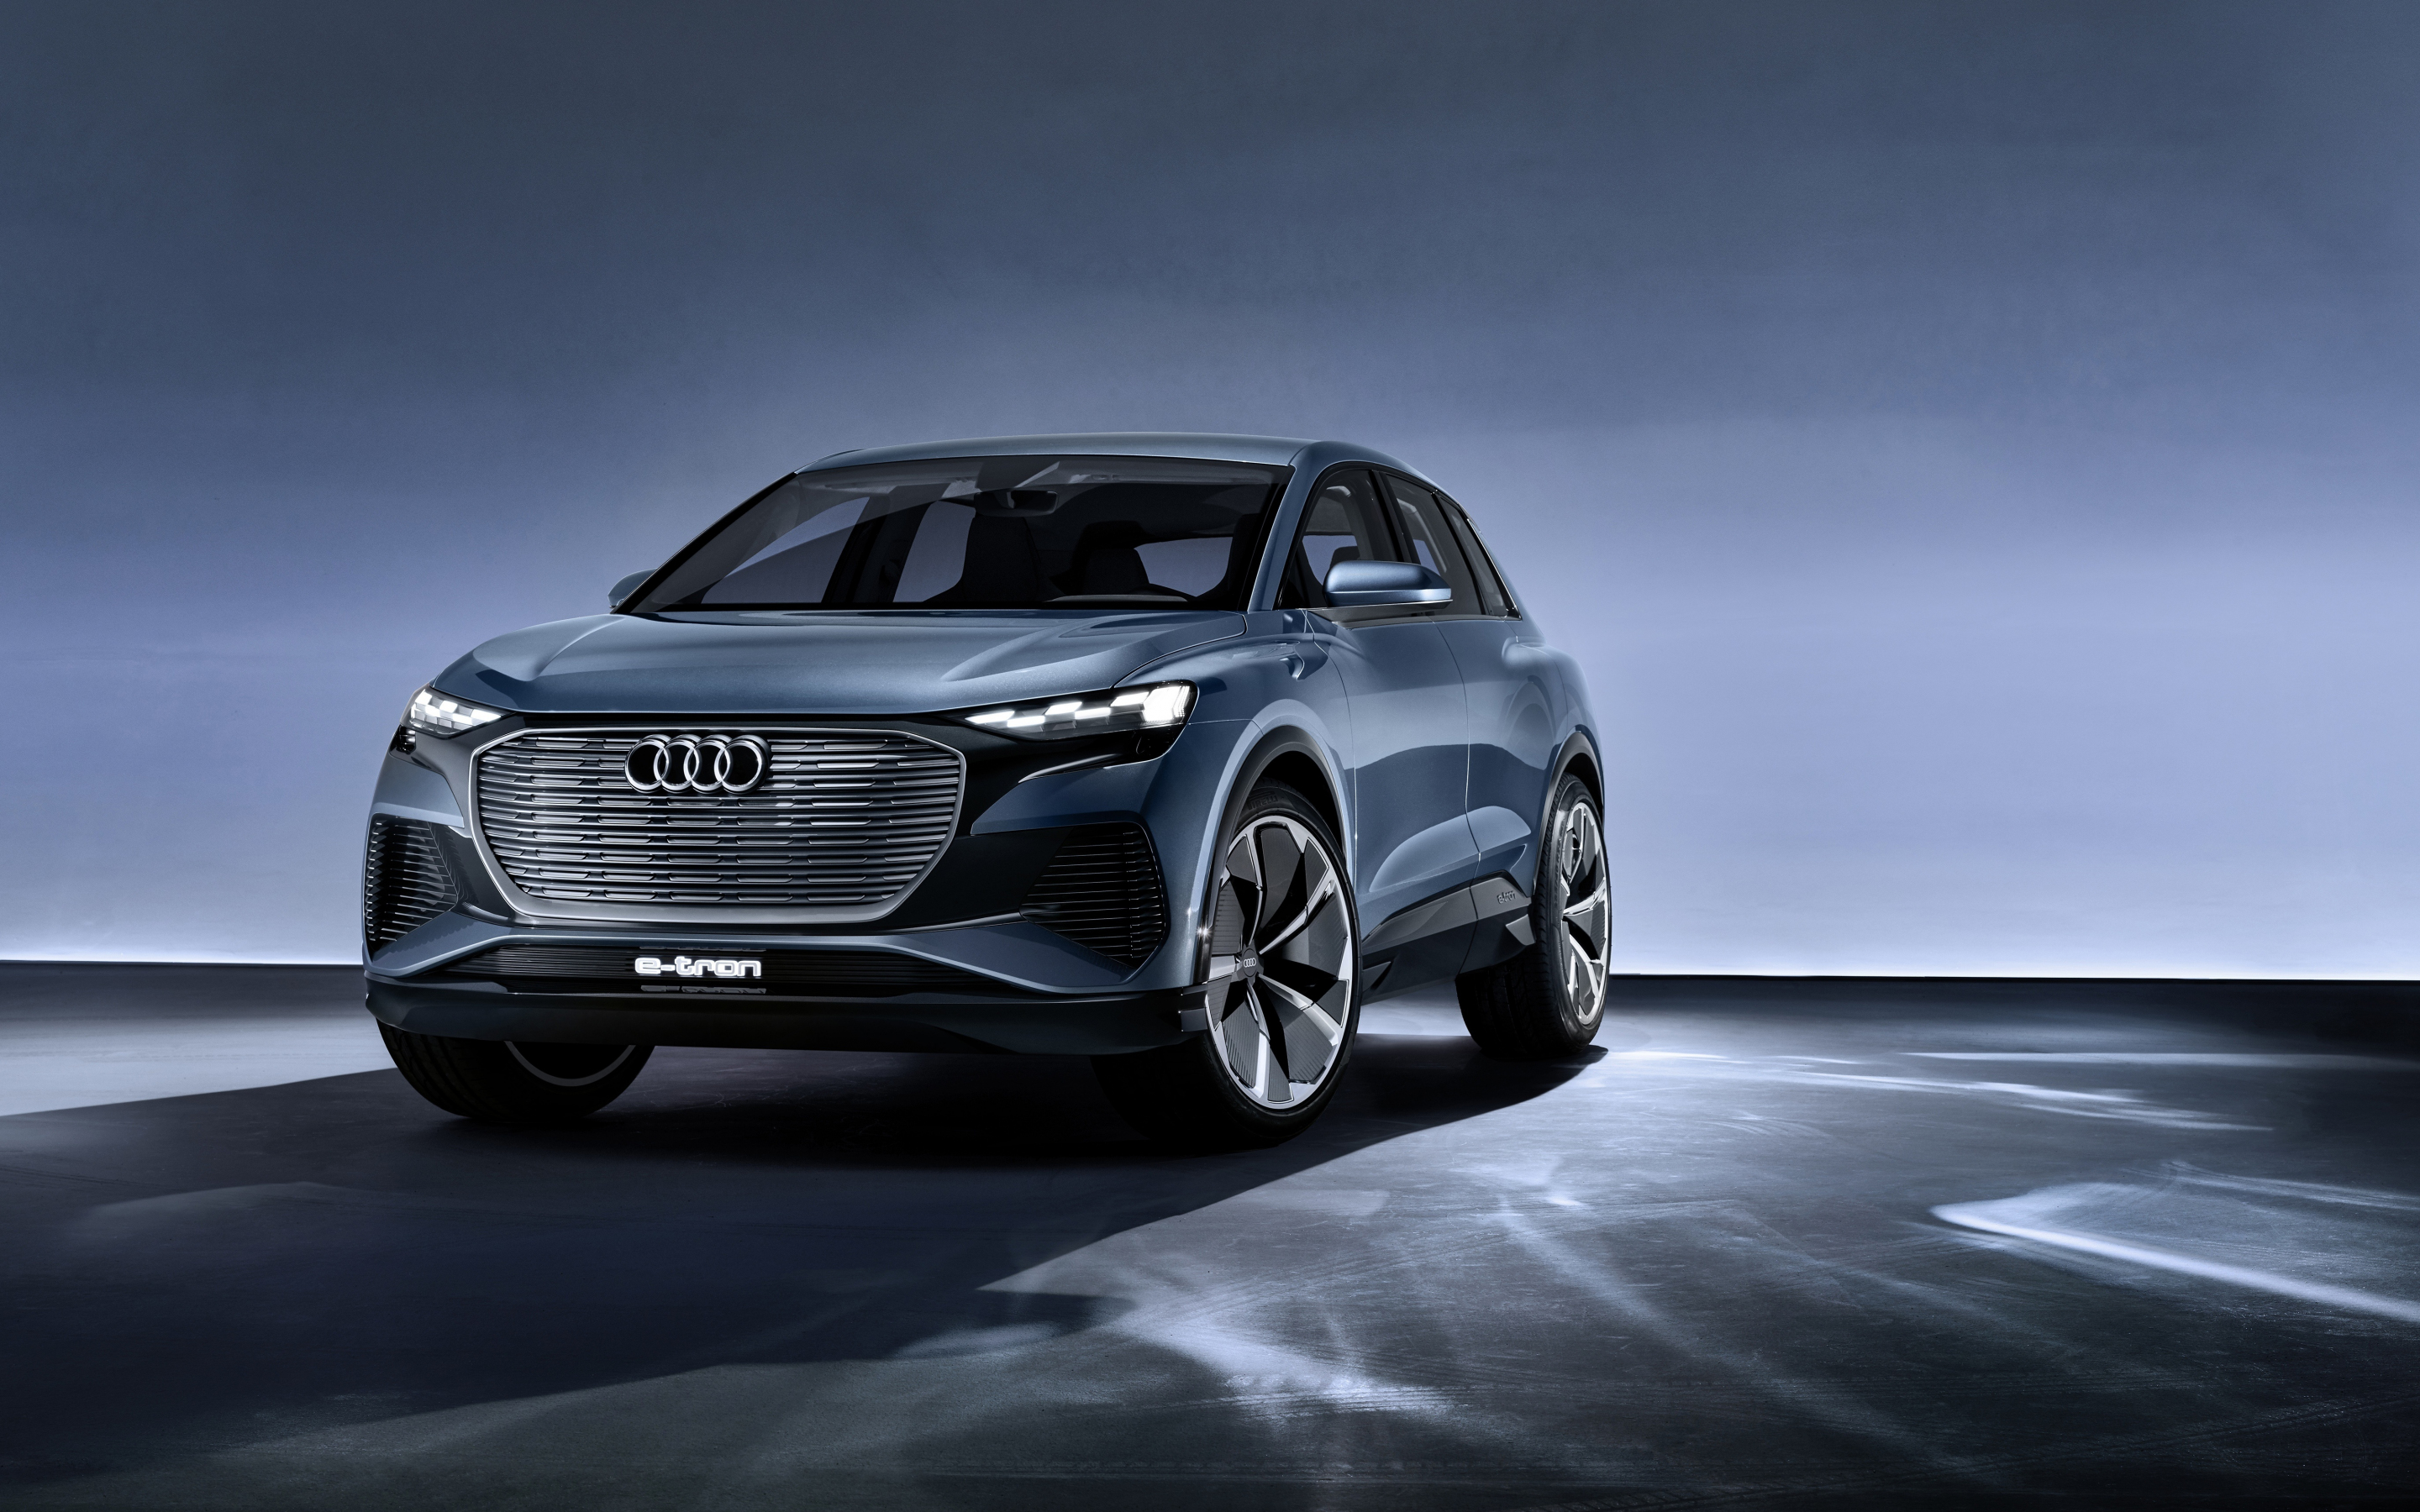 2019 Audi Q4 e-tron concept, concept electric car, 2880x1800 wallpaper